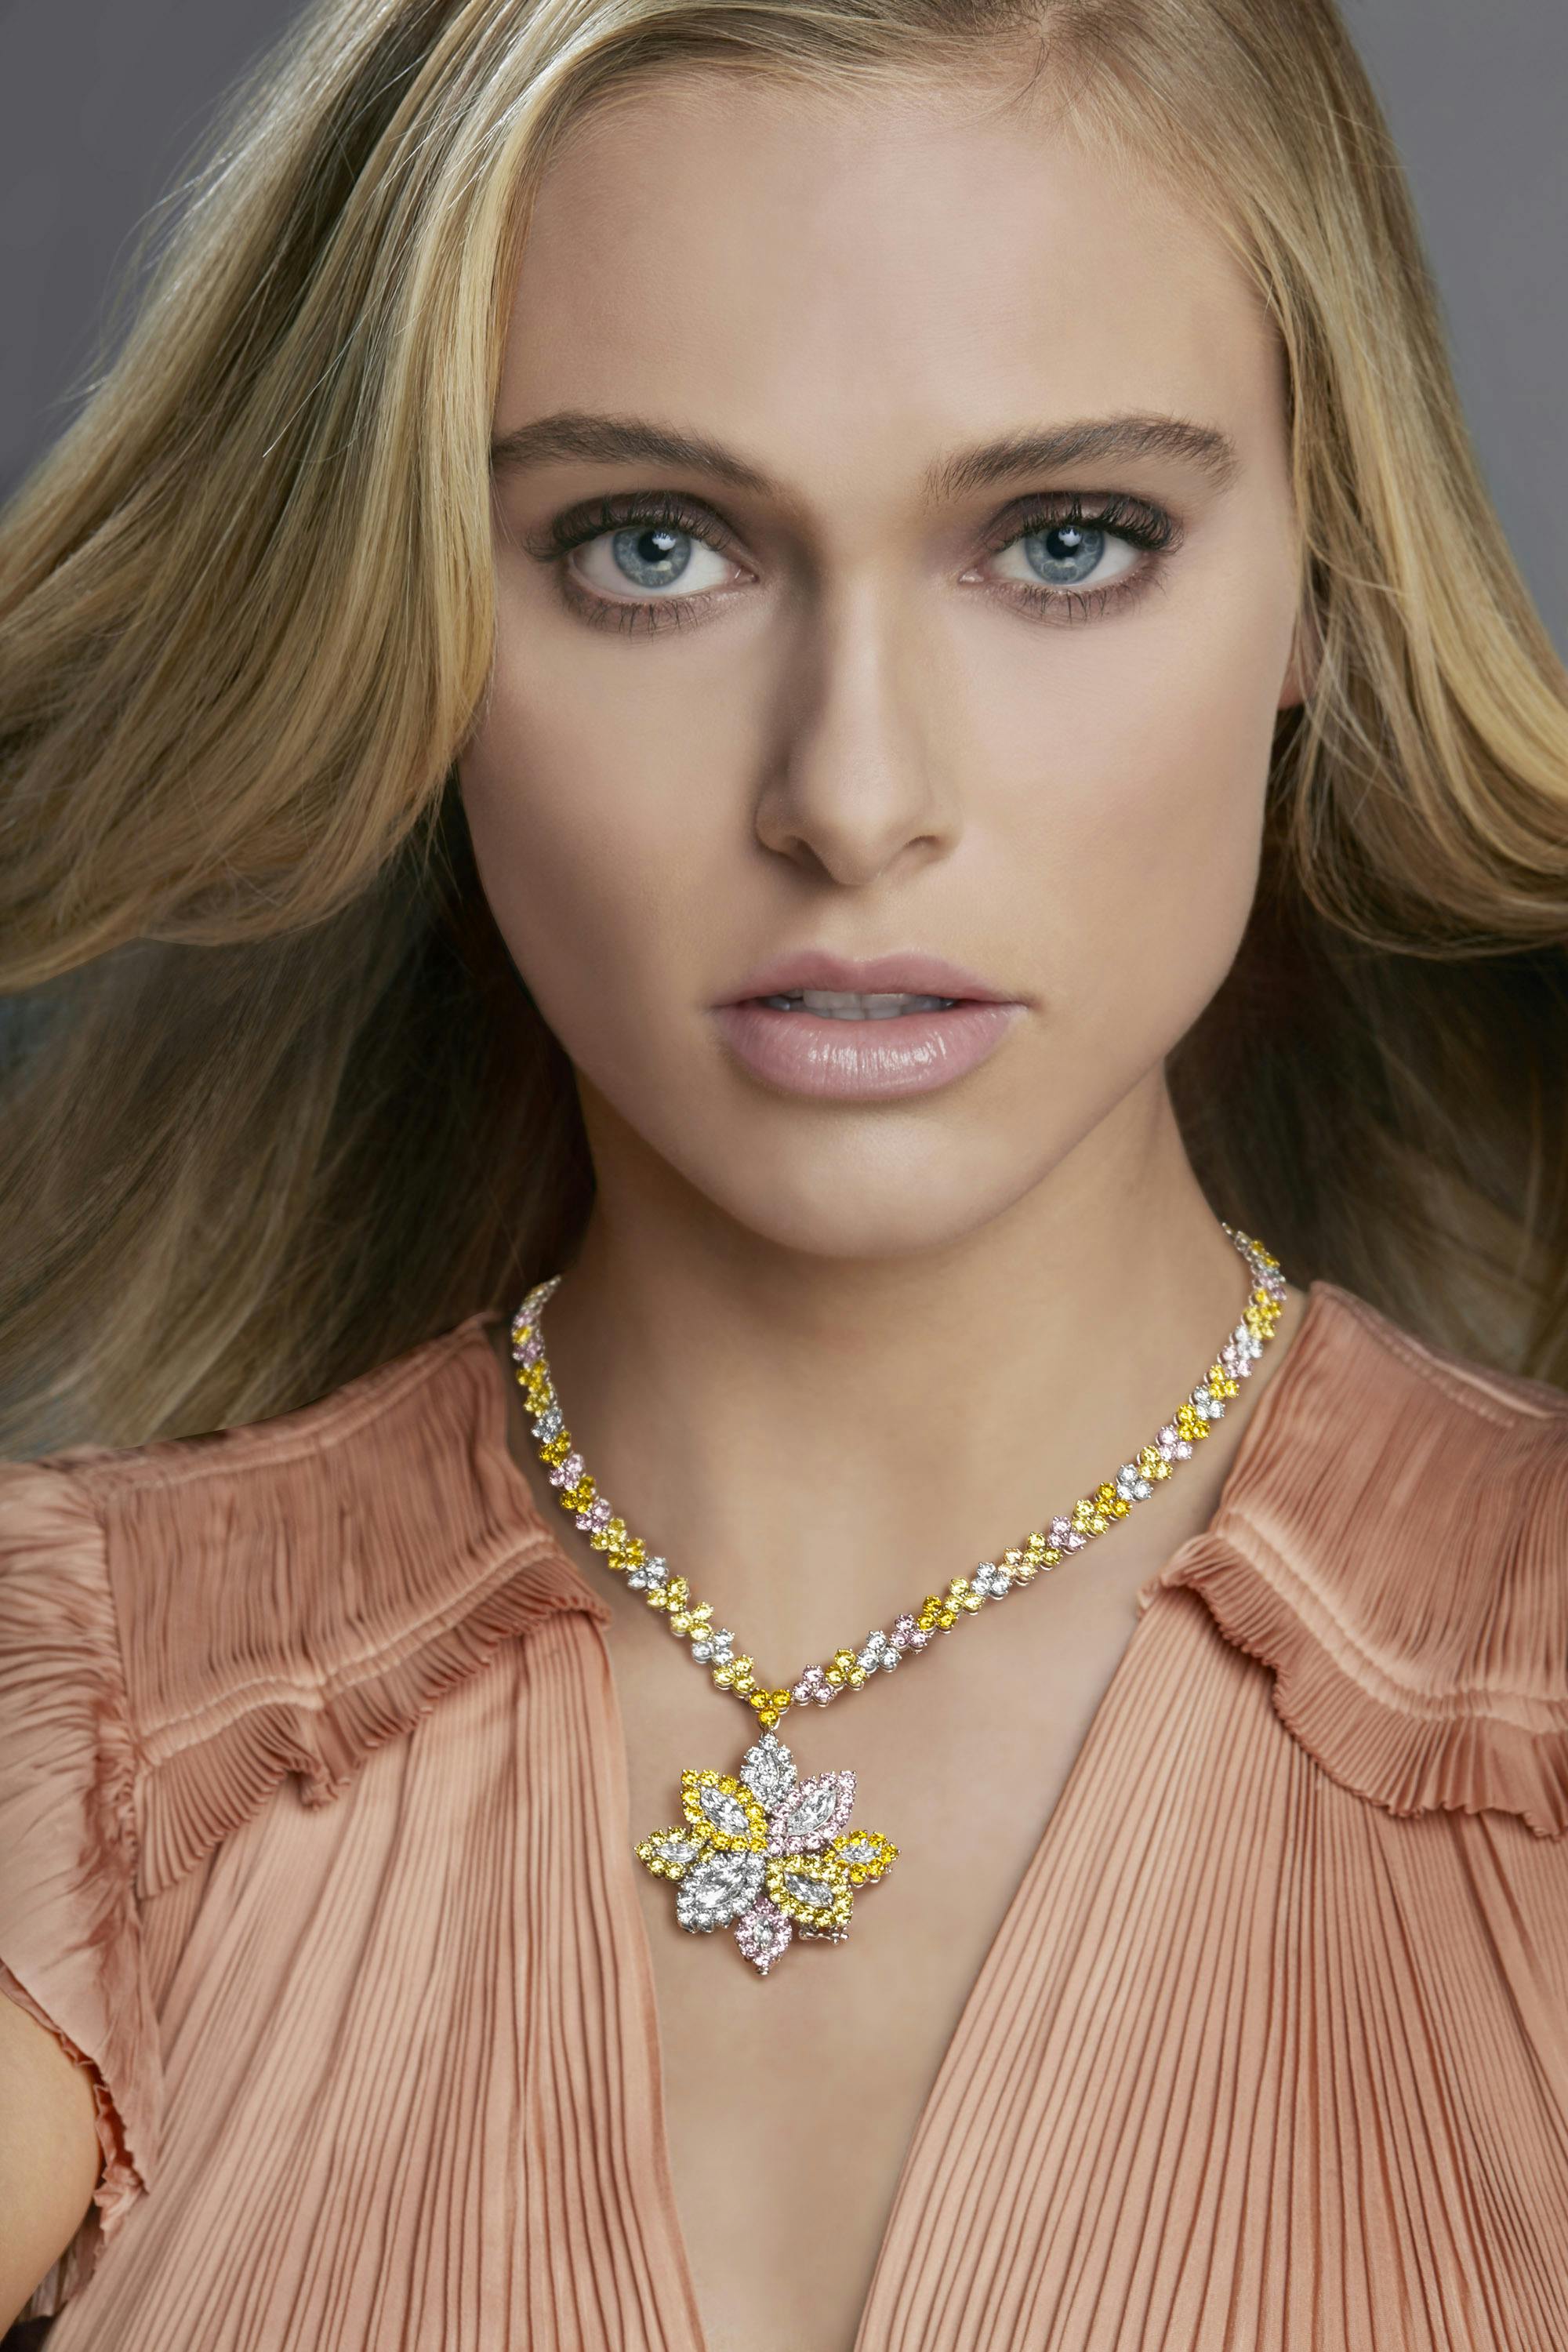 Model wearing diamond pendant